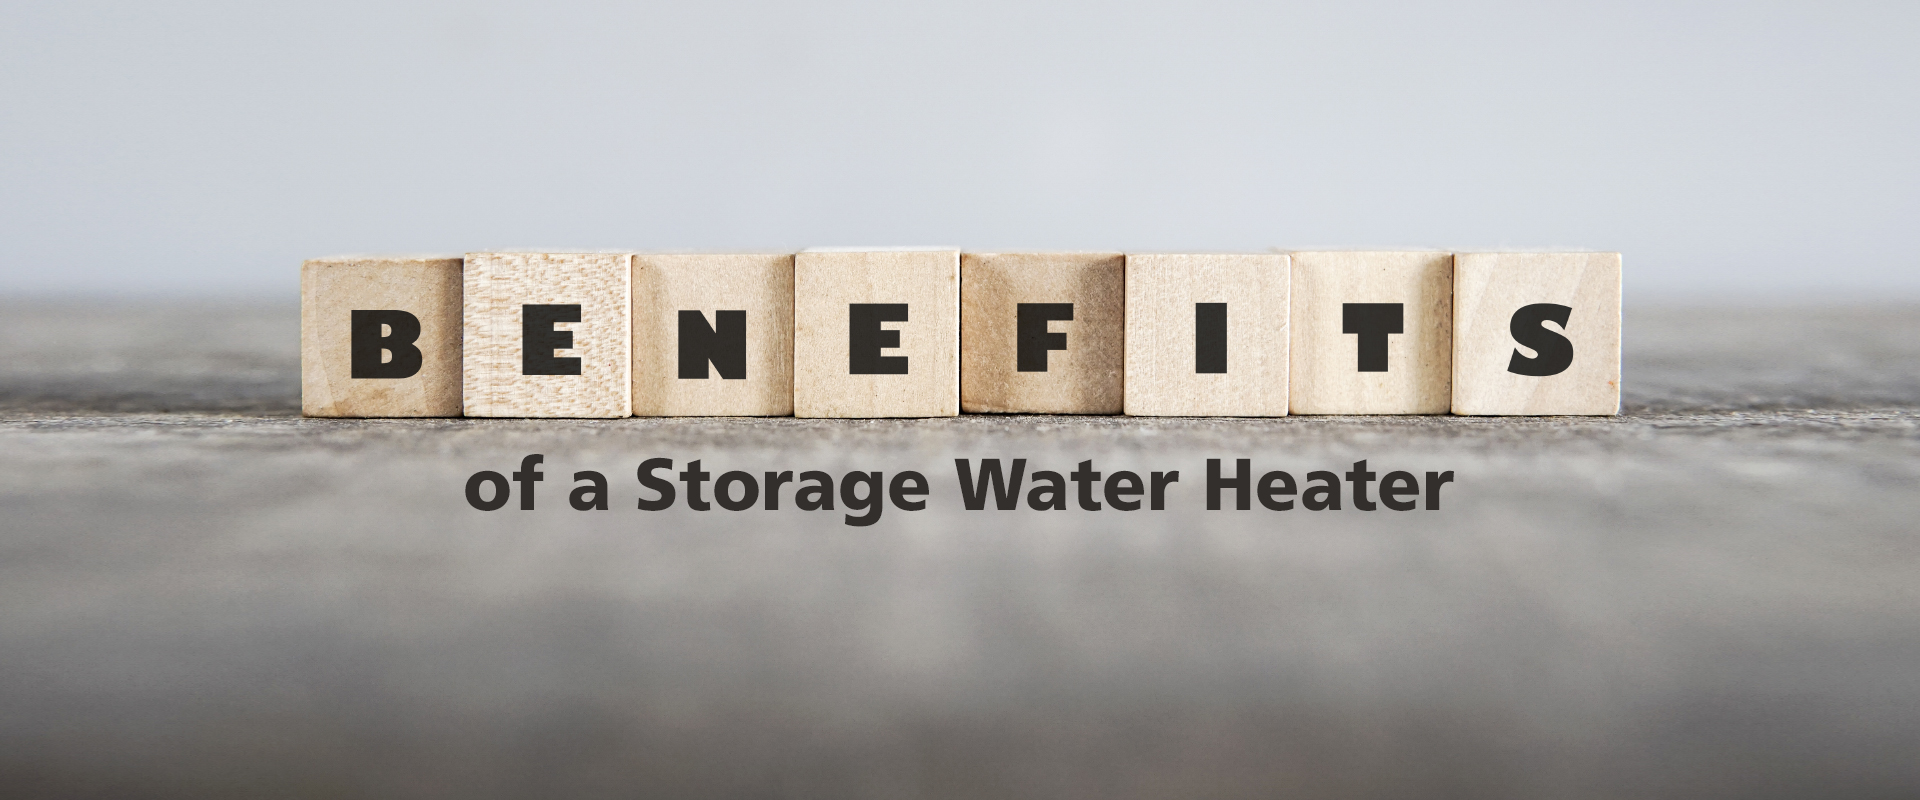 Benefits of a Storage Water Heater